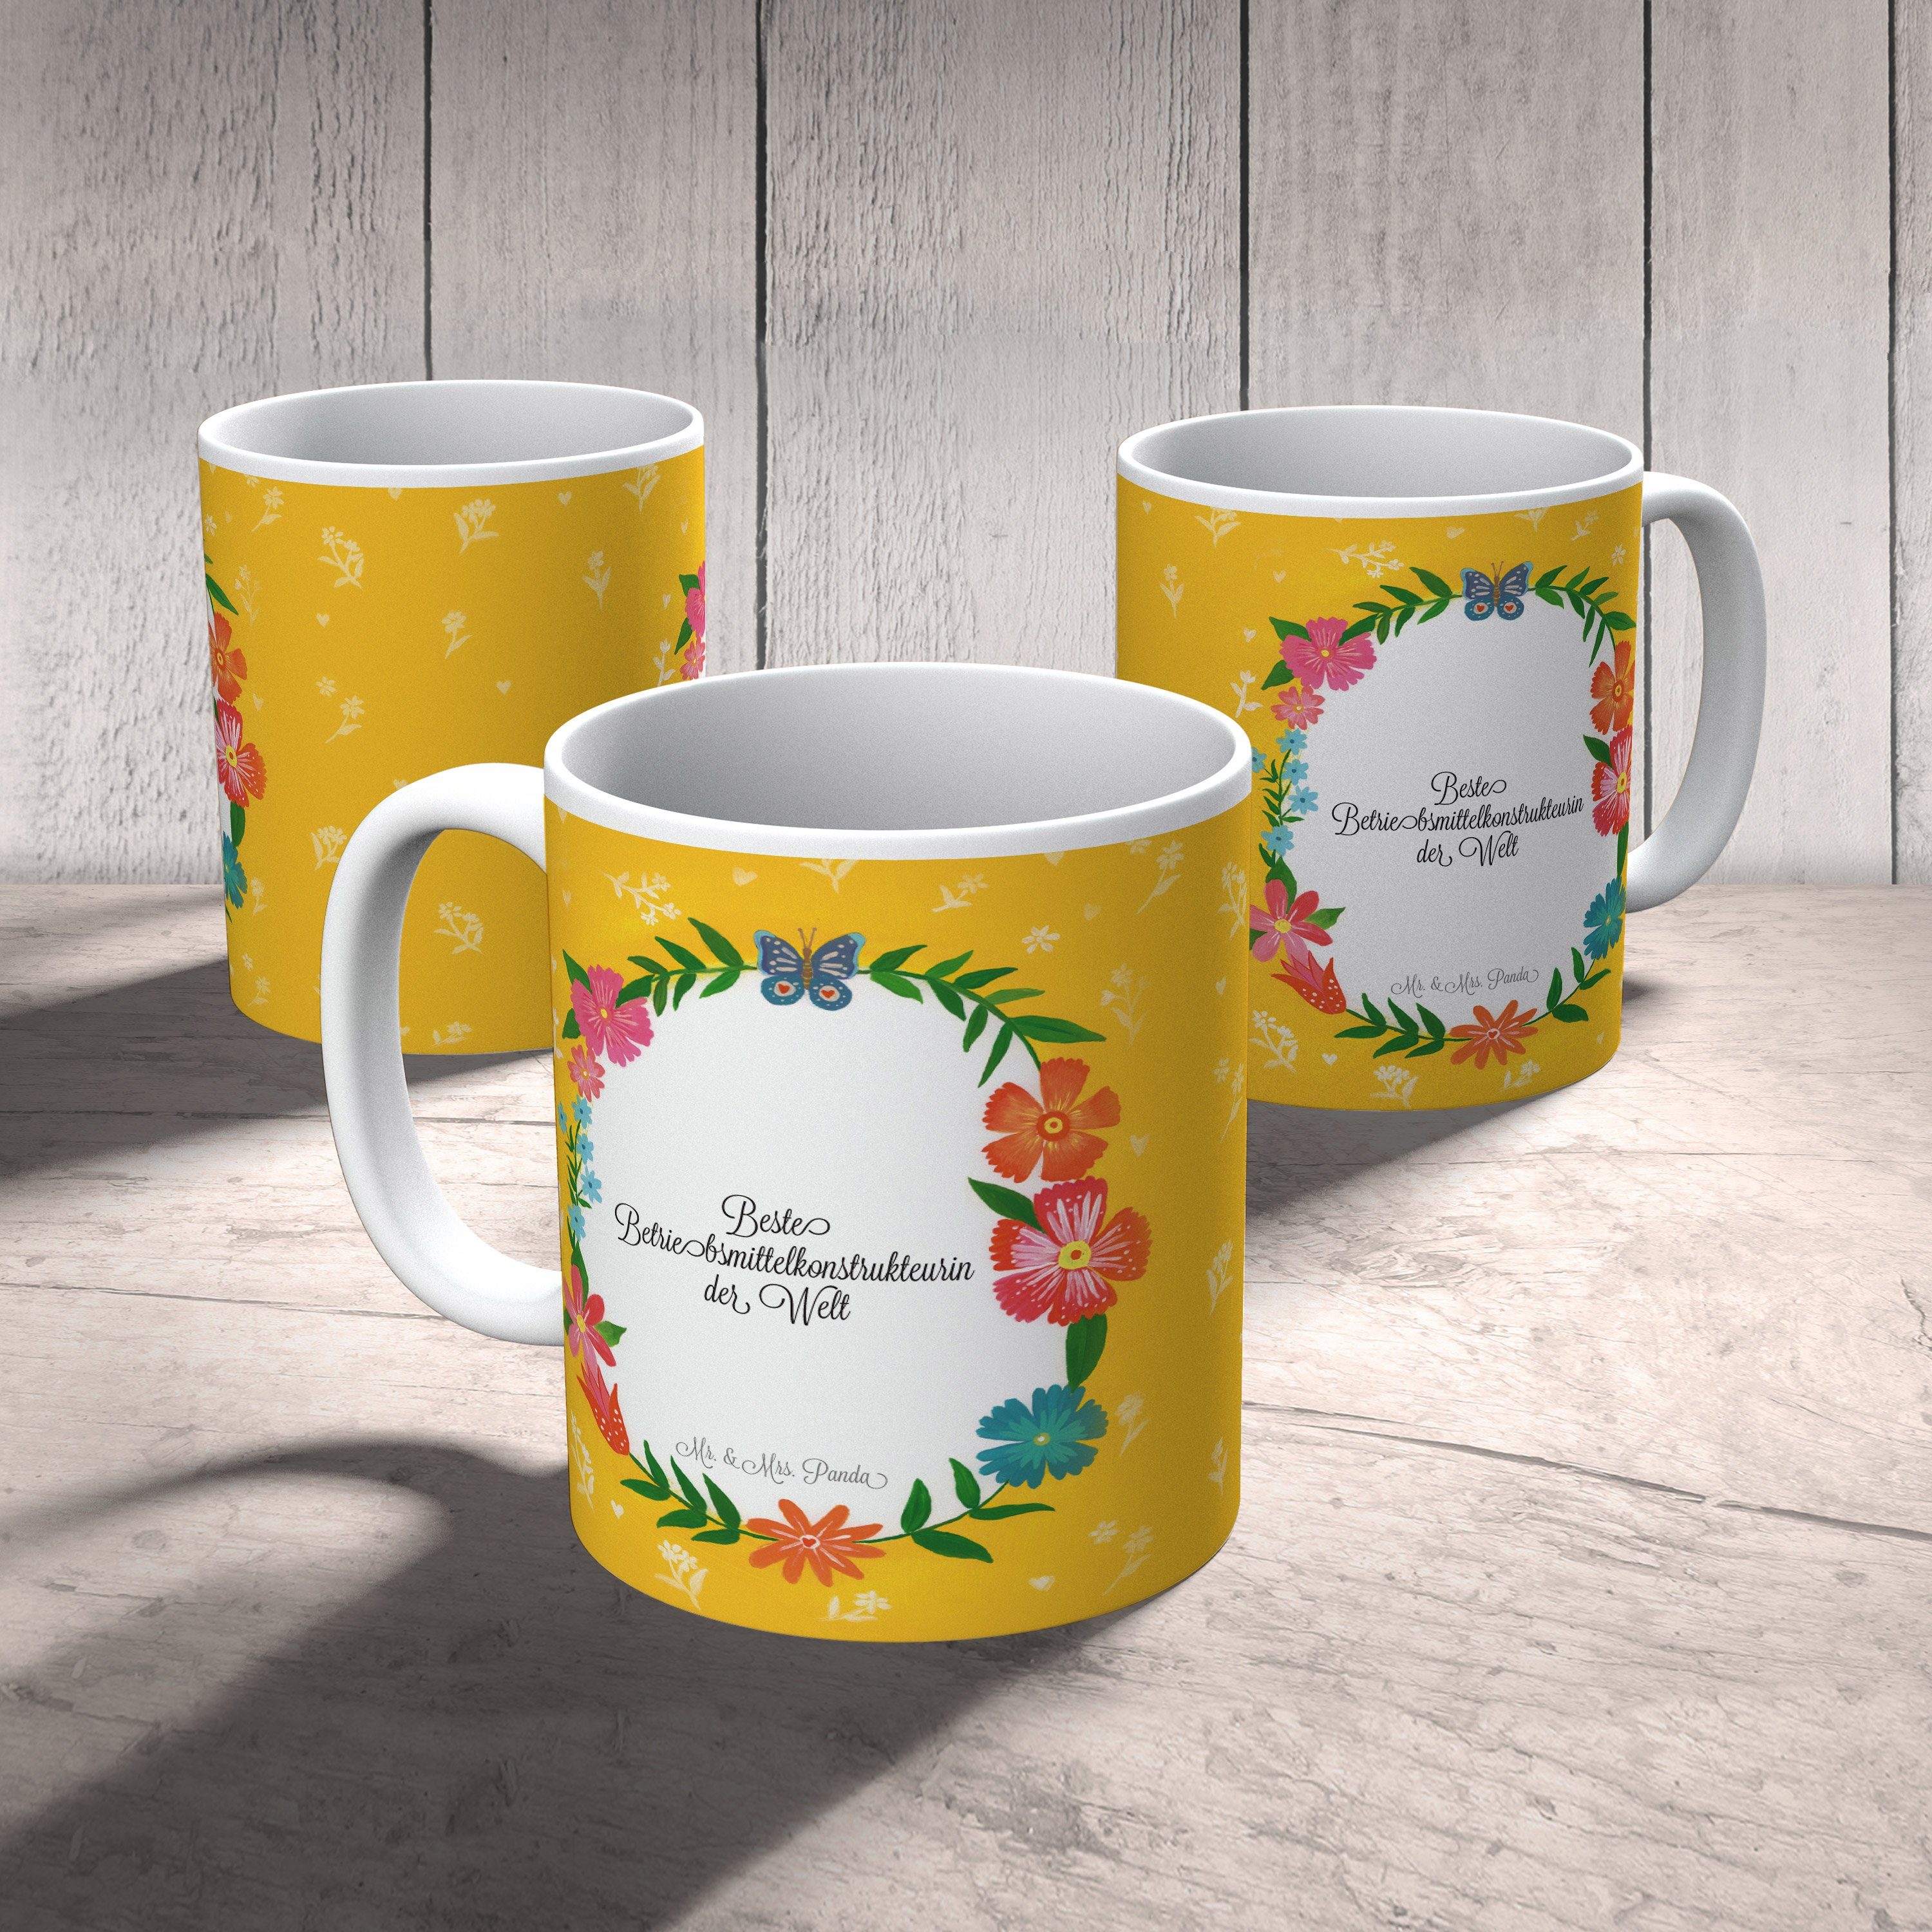 Mr. & Mrs. Panda Tasse - Tasse, Kaffeebeche, Schenken, Geschenk, Keramik Betriebsmittelkonstrukteurin